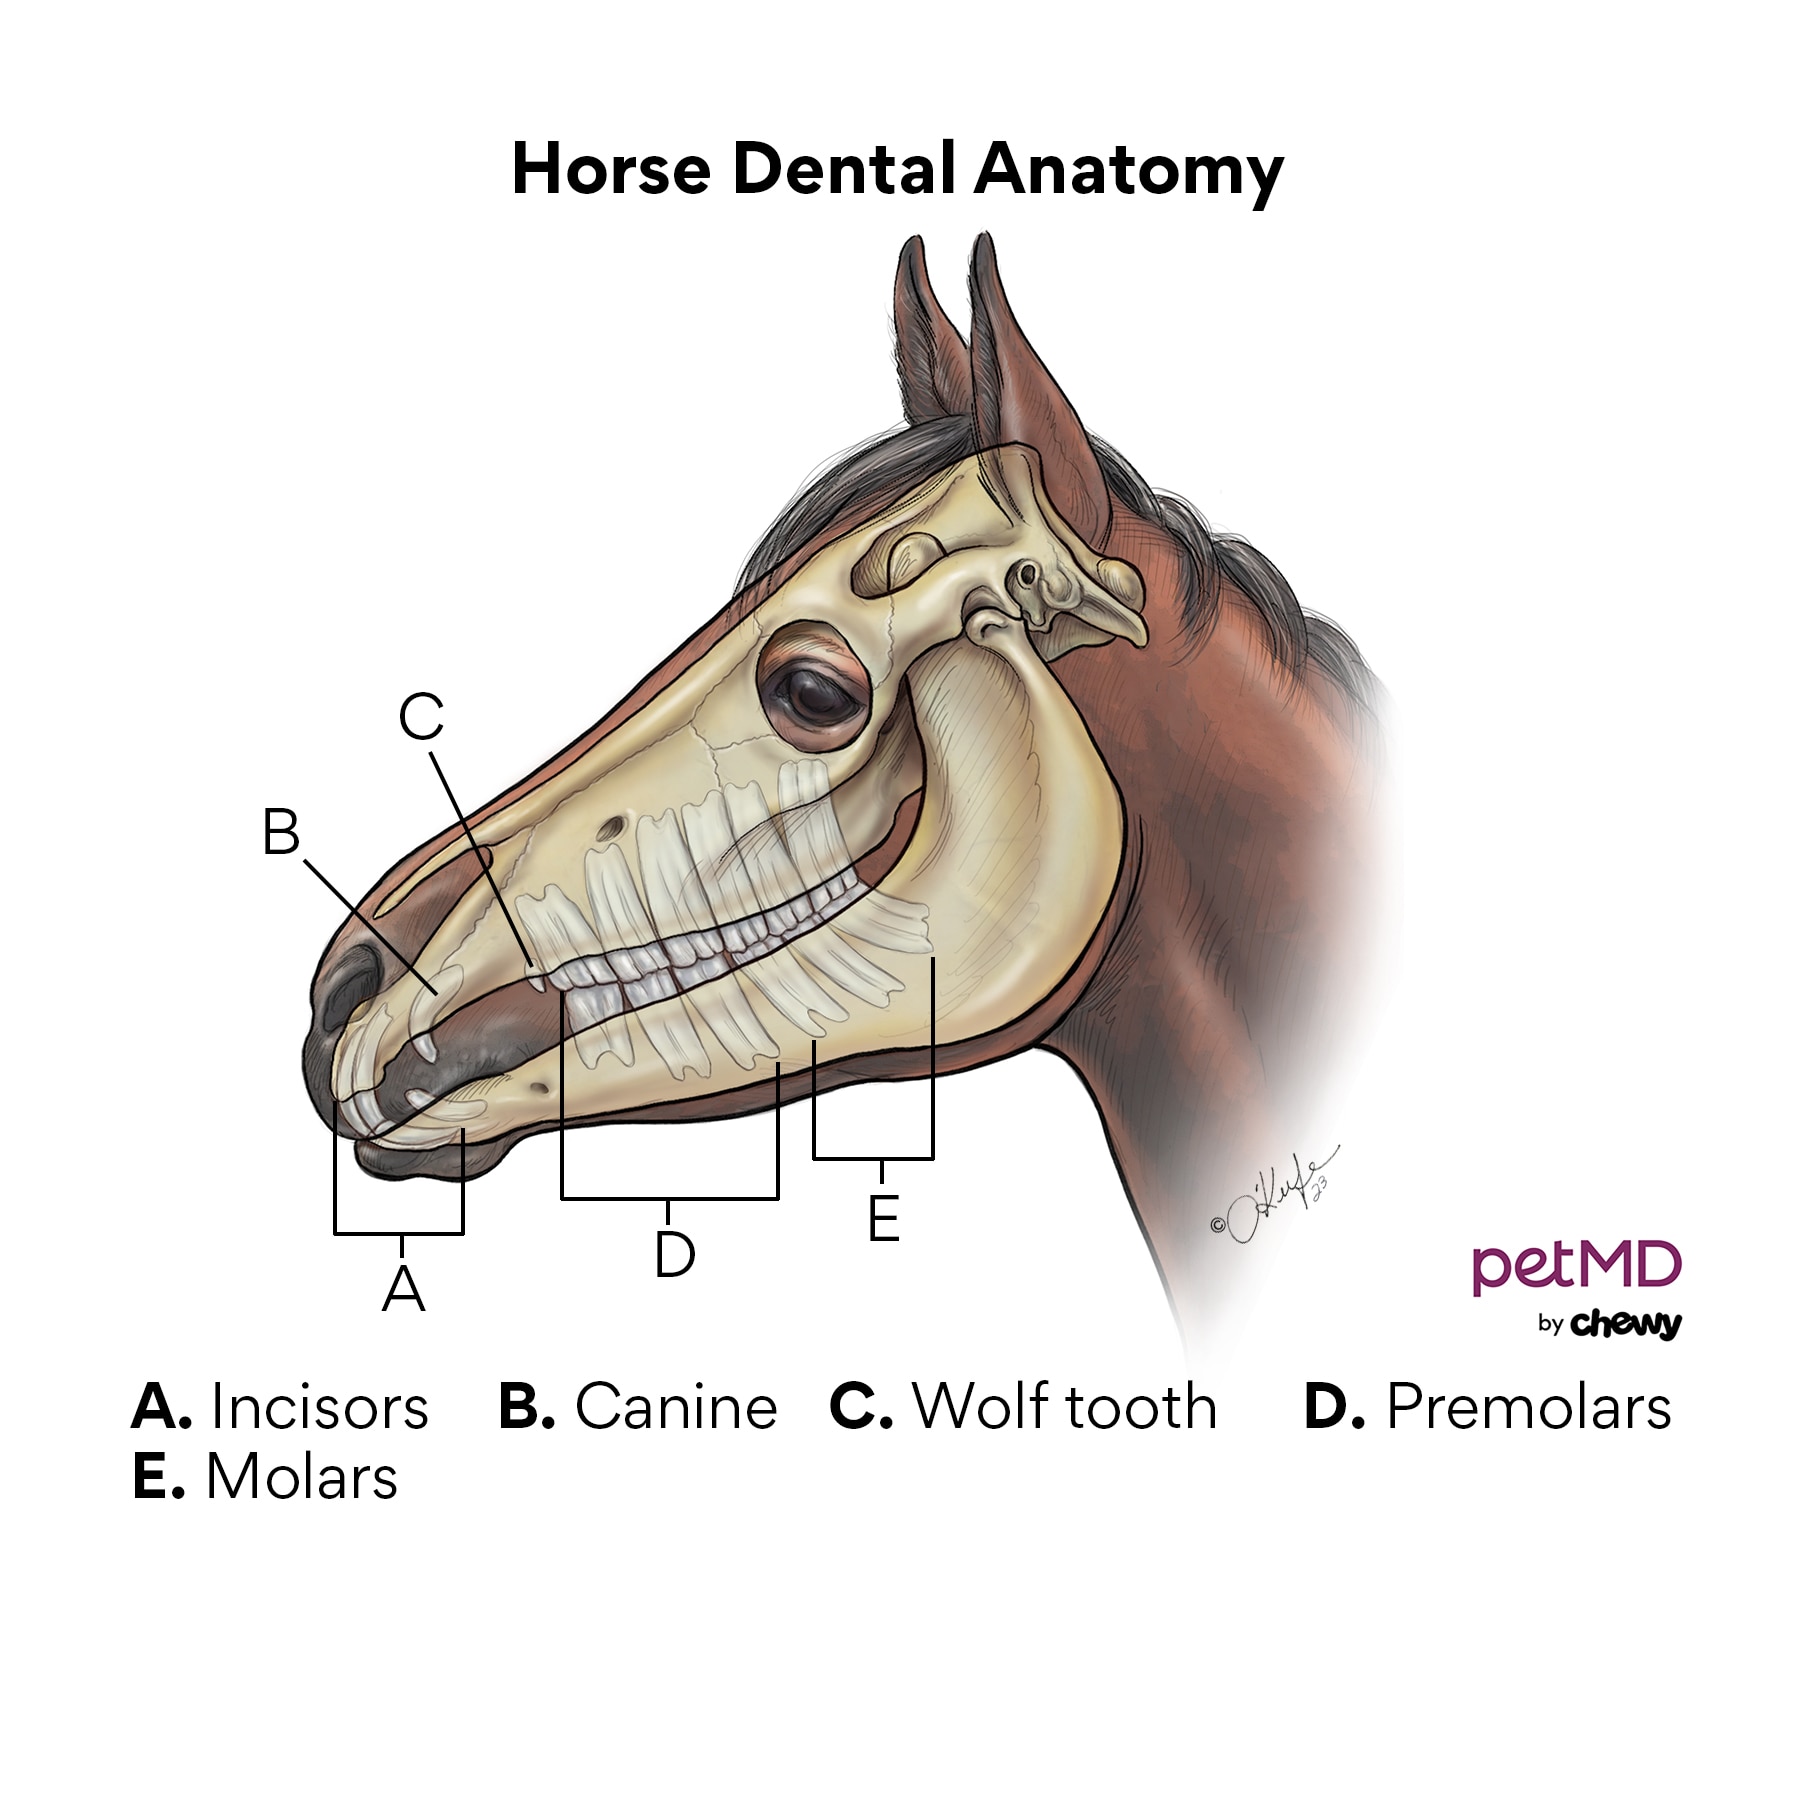 Horse Dental Anatomy